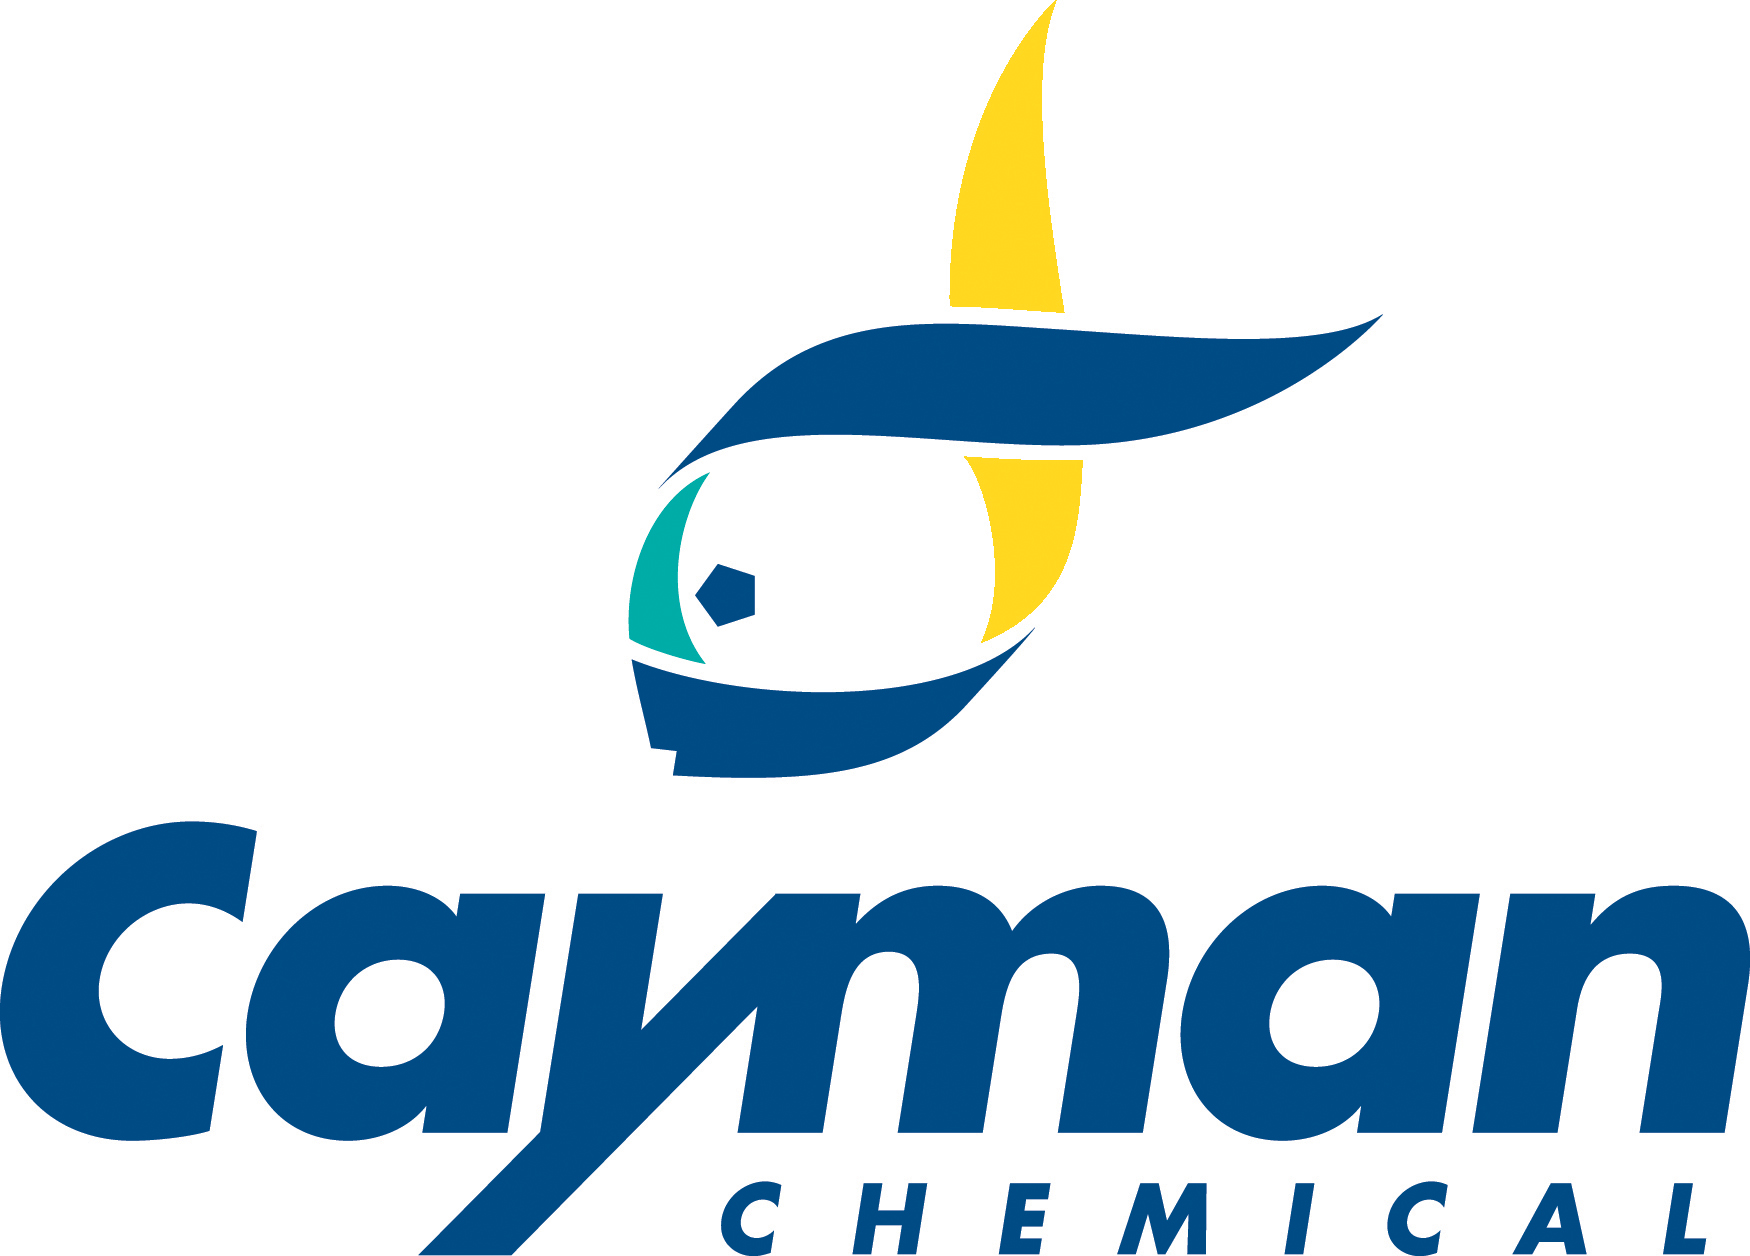 Cayman Chemical Company | CZ Biotech Companies ...